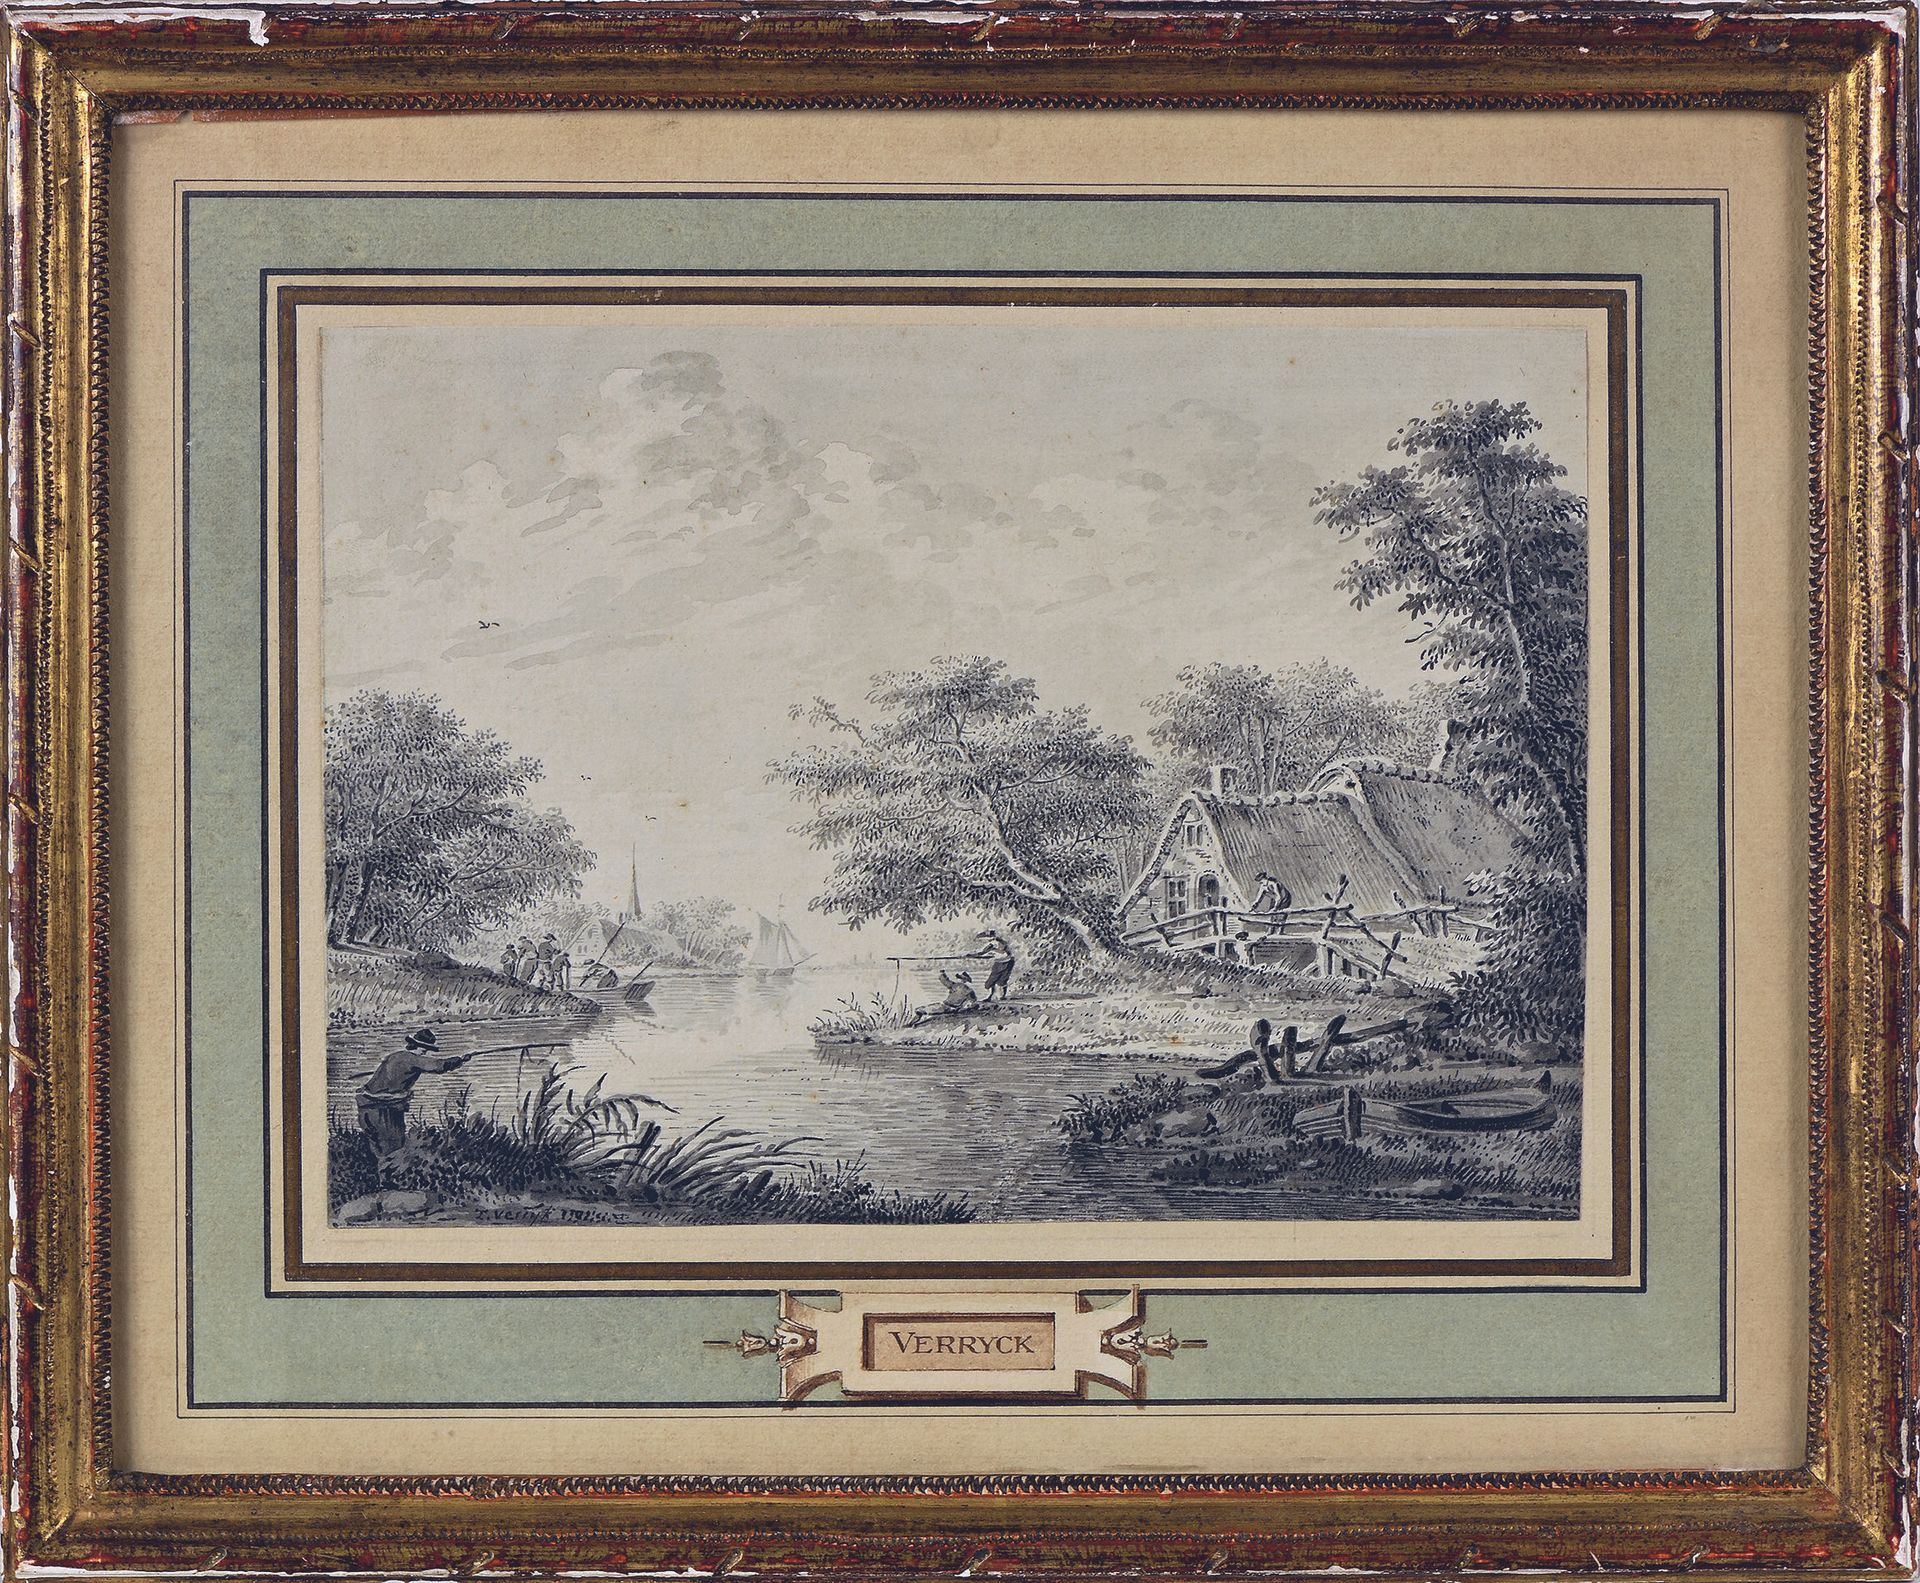 Null Theodor VERRYCK (活跃于18世纪)
河流景观与人物
灰色水洗，左下方有签名。
17,2 x 23,3 cm